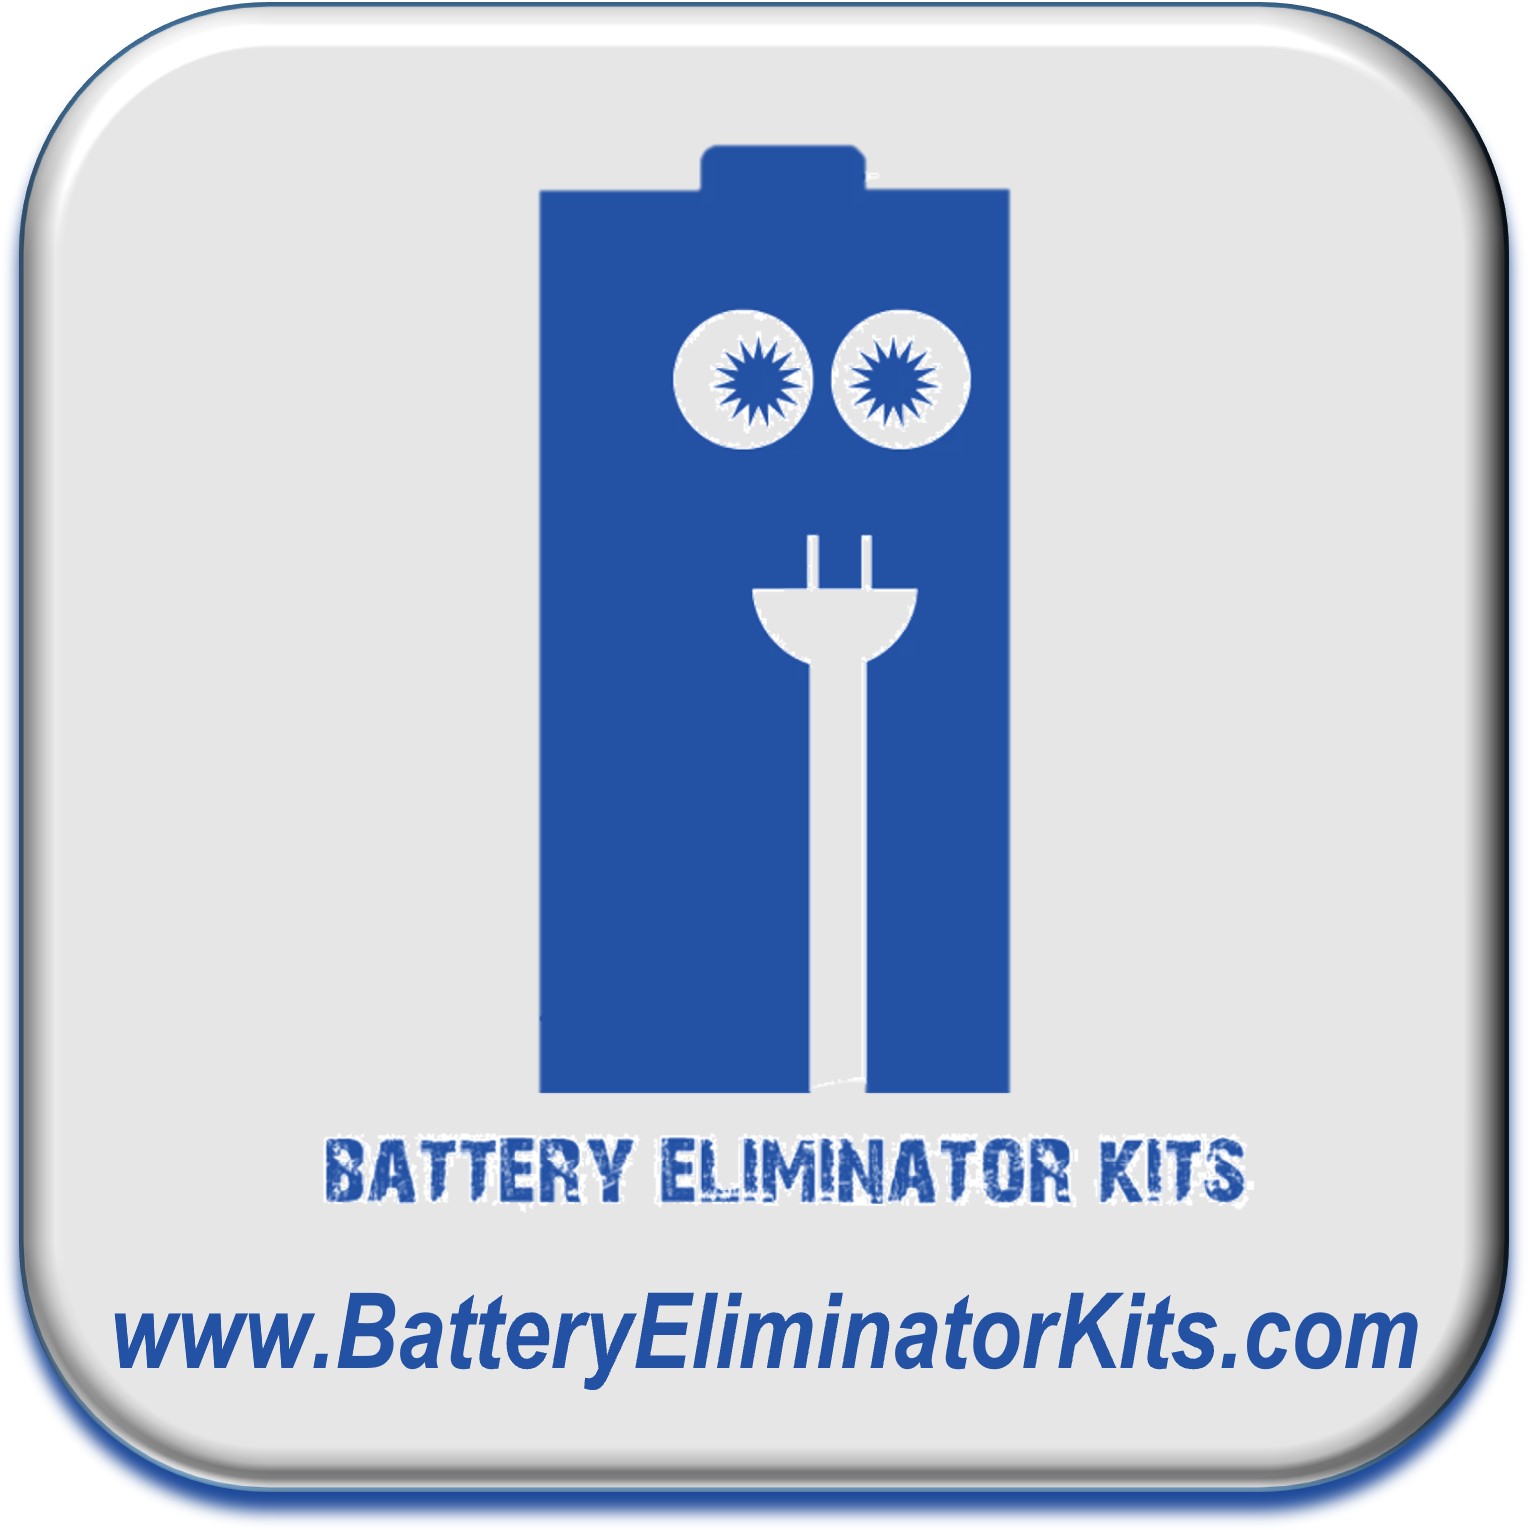 BatteryEliminatorKits.com